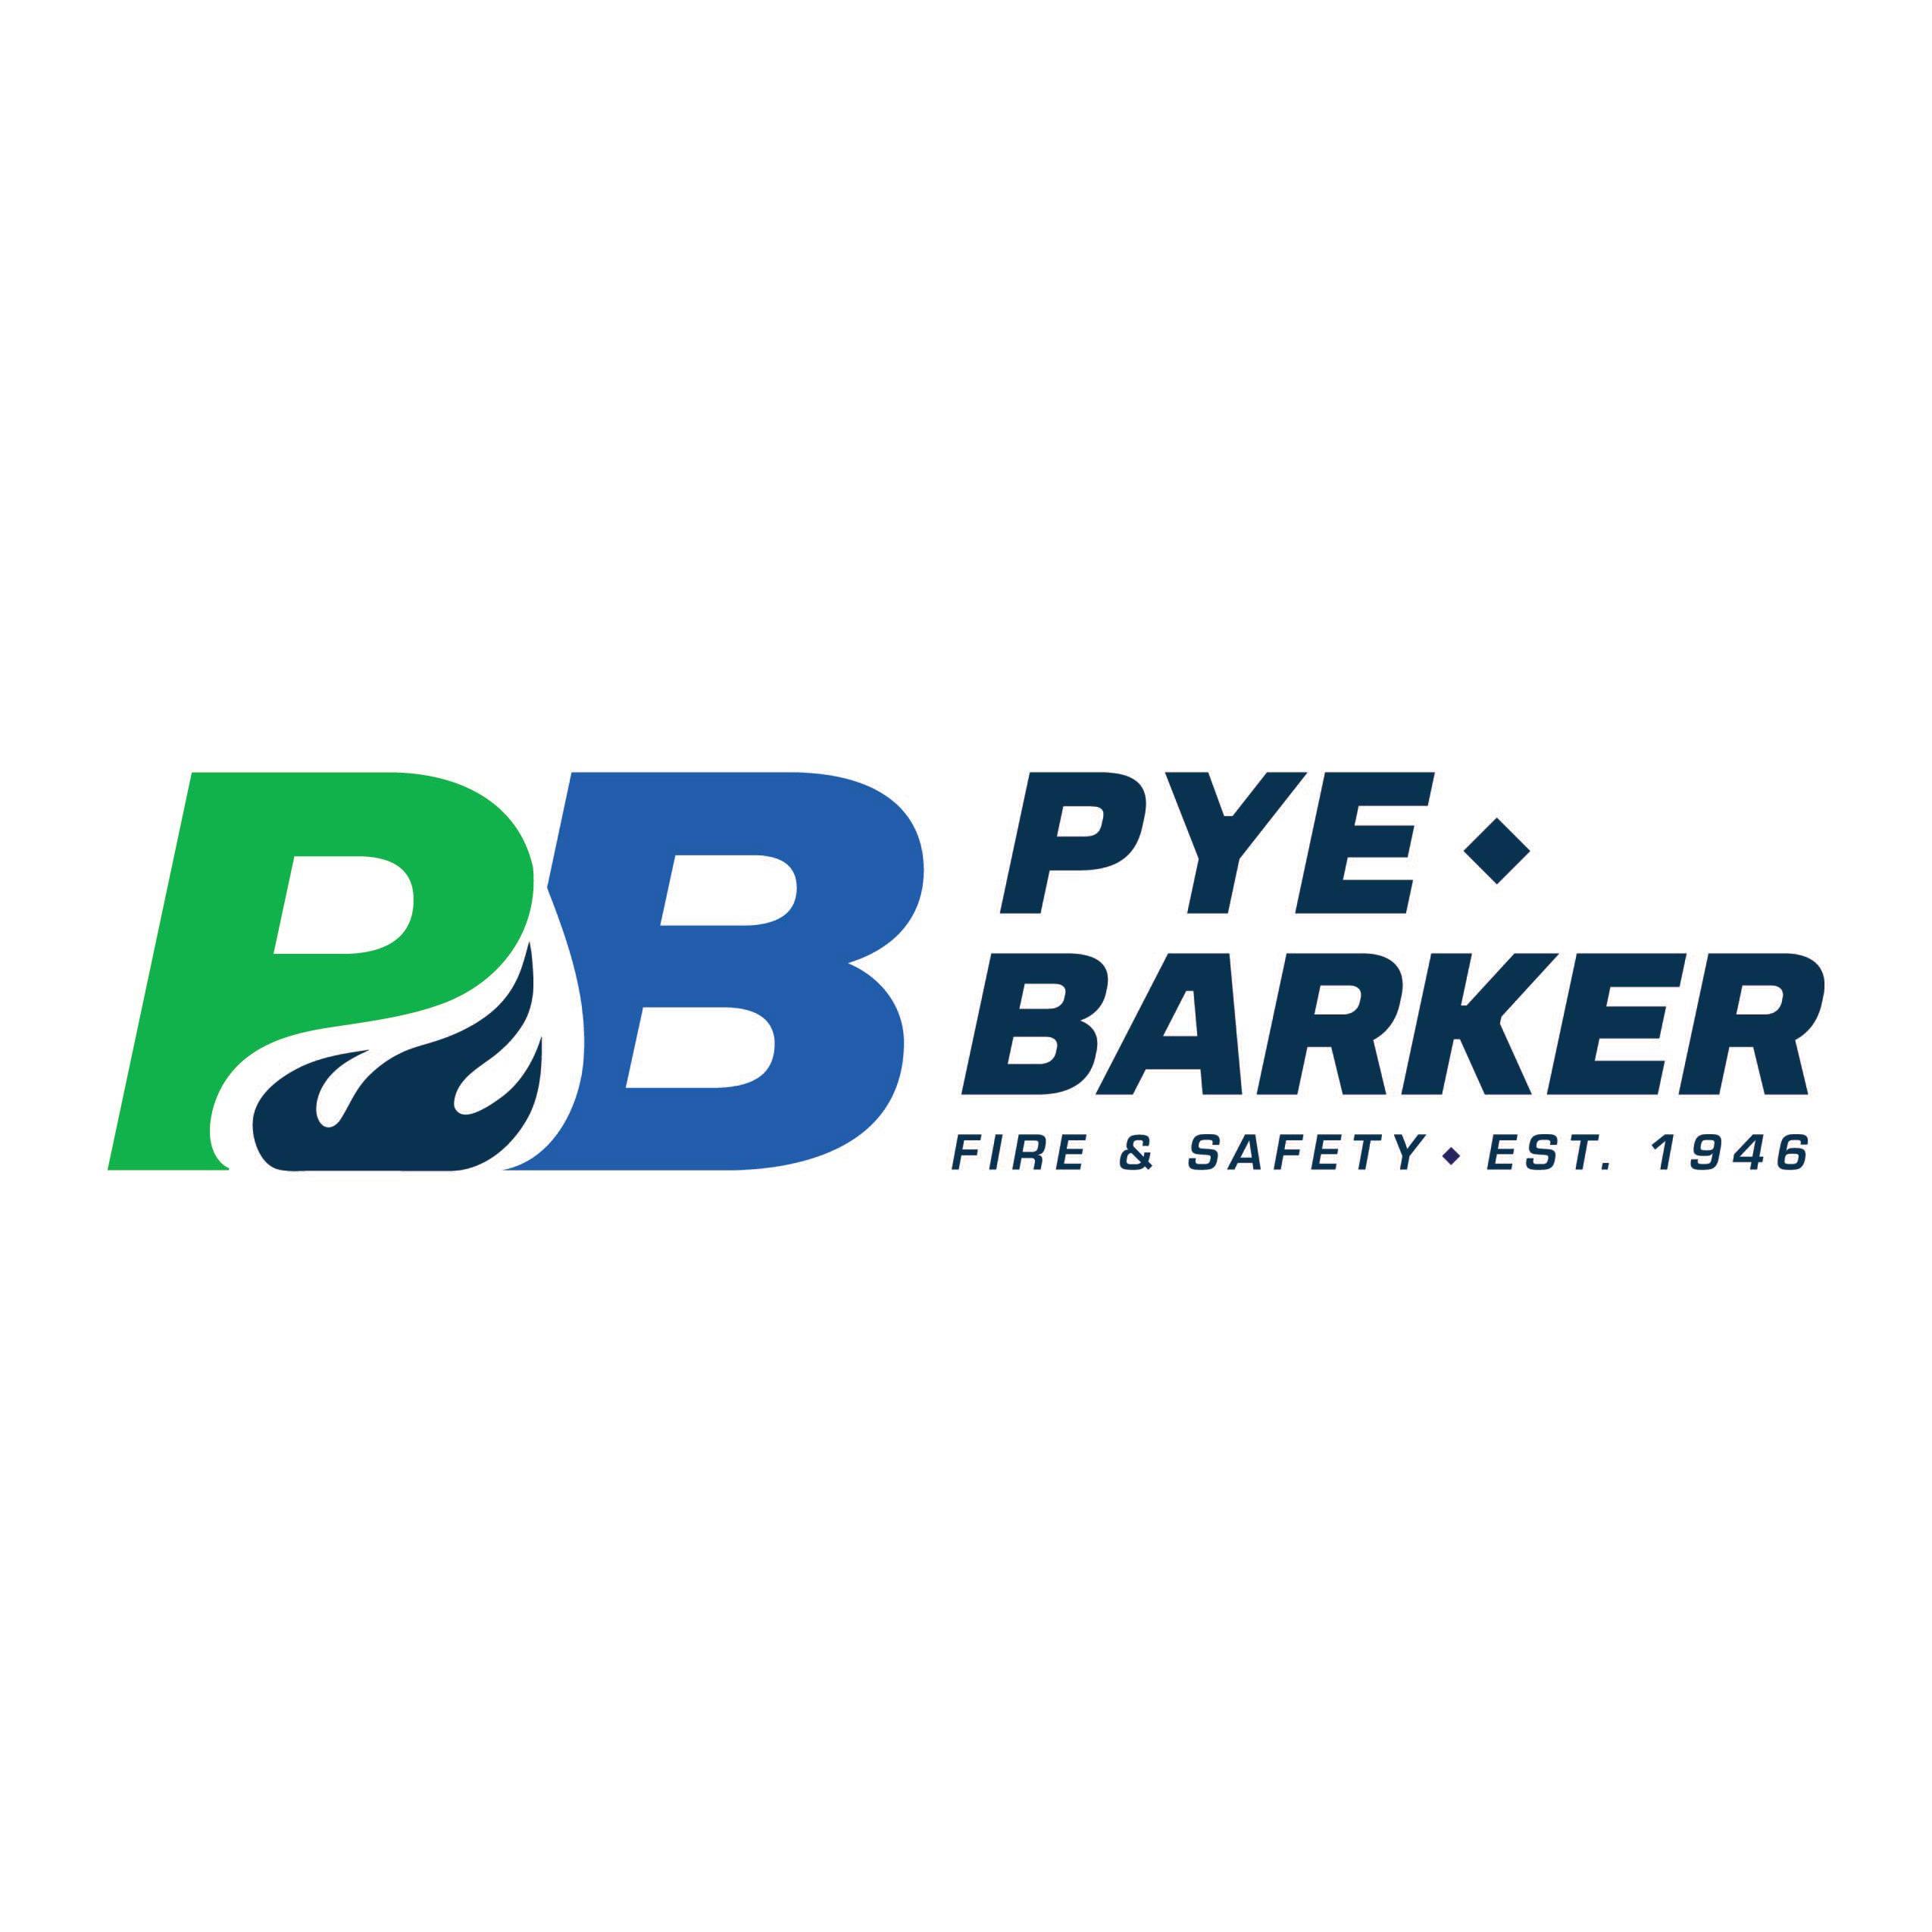 Pye-Barker Fire & Safety - Durham, NC 27704 - (919)220-3265 | ShowMeLocal.com